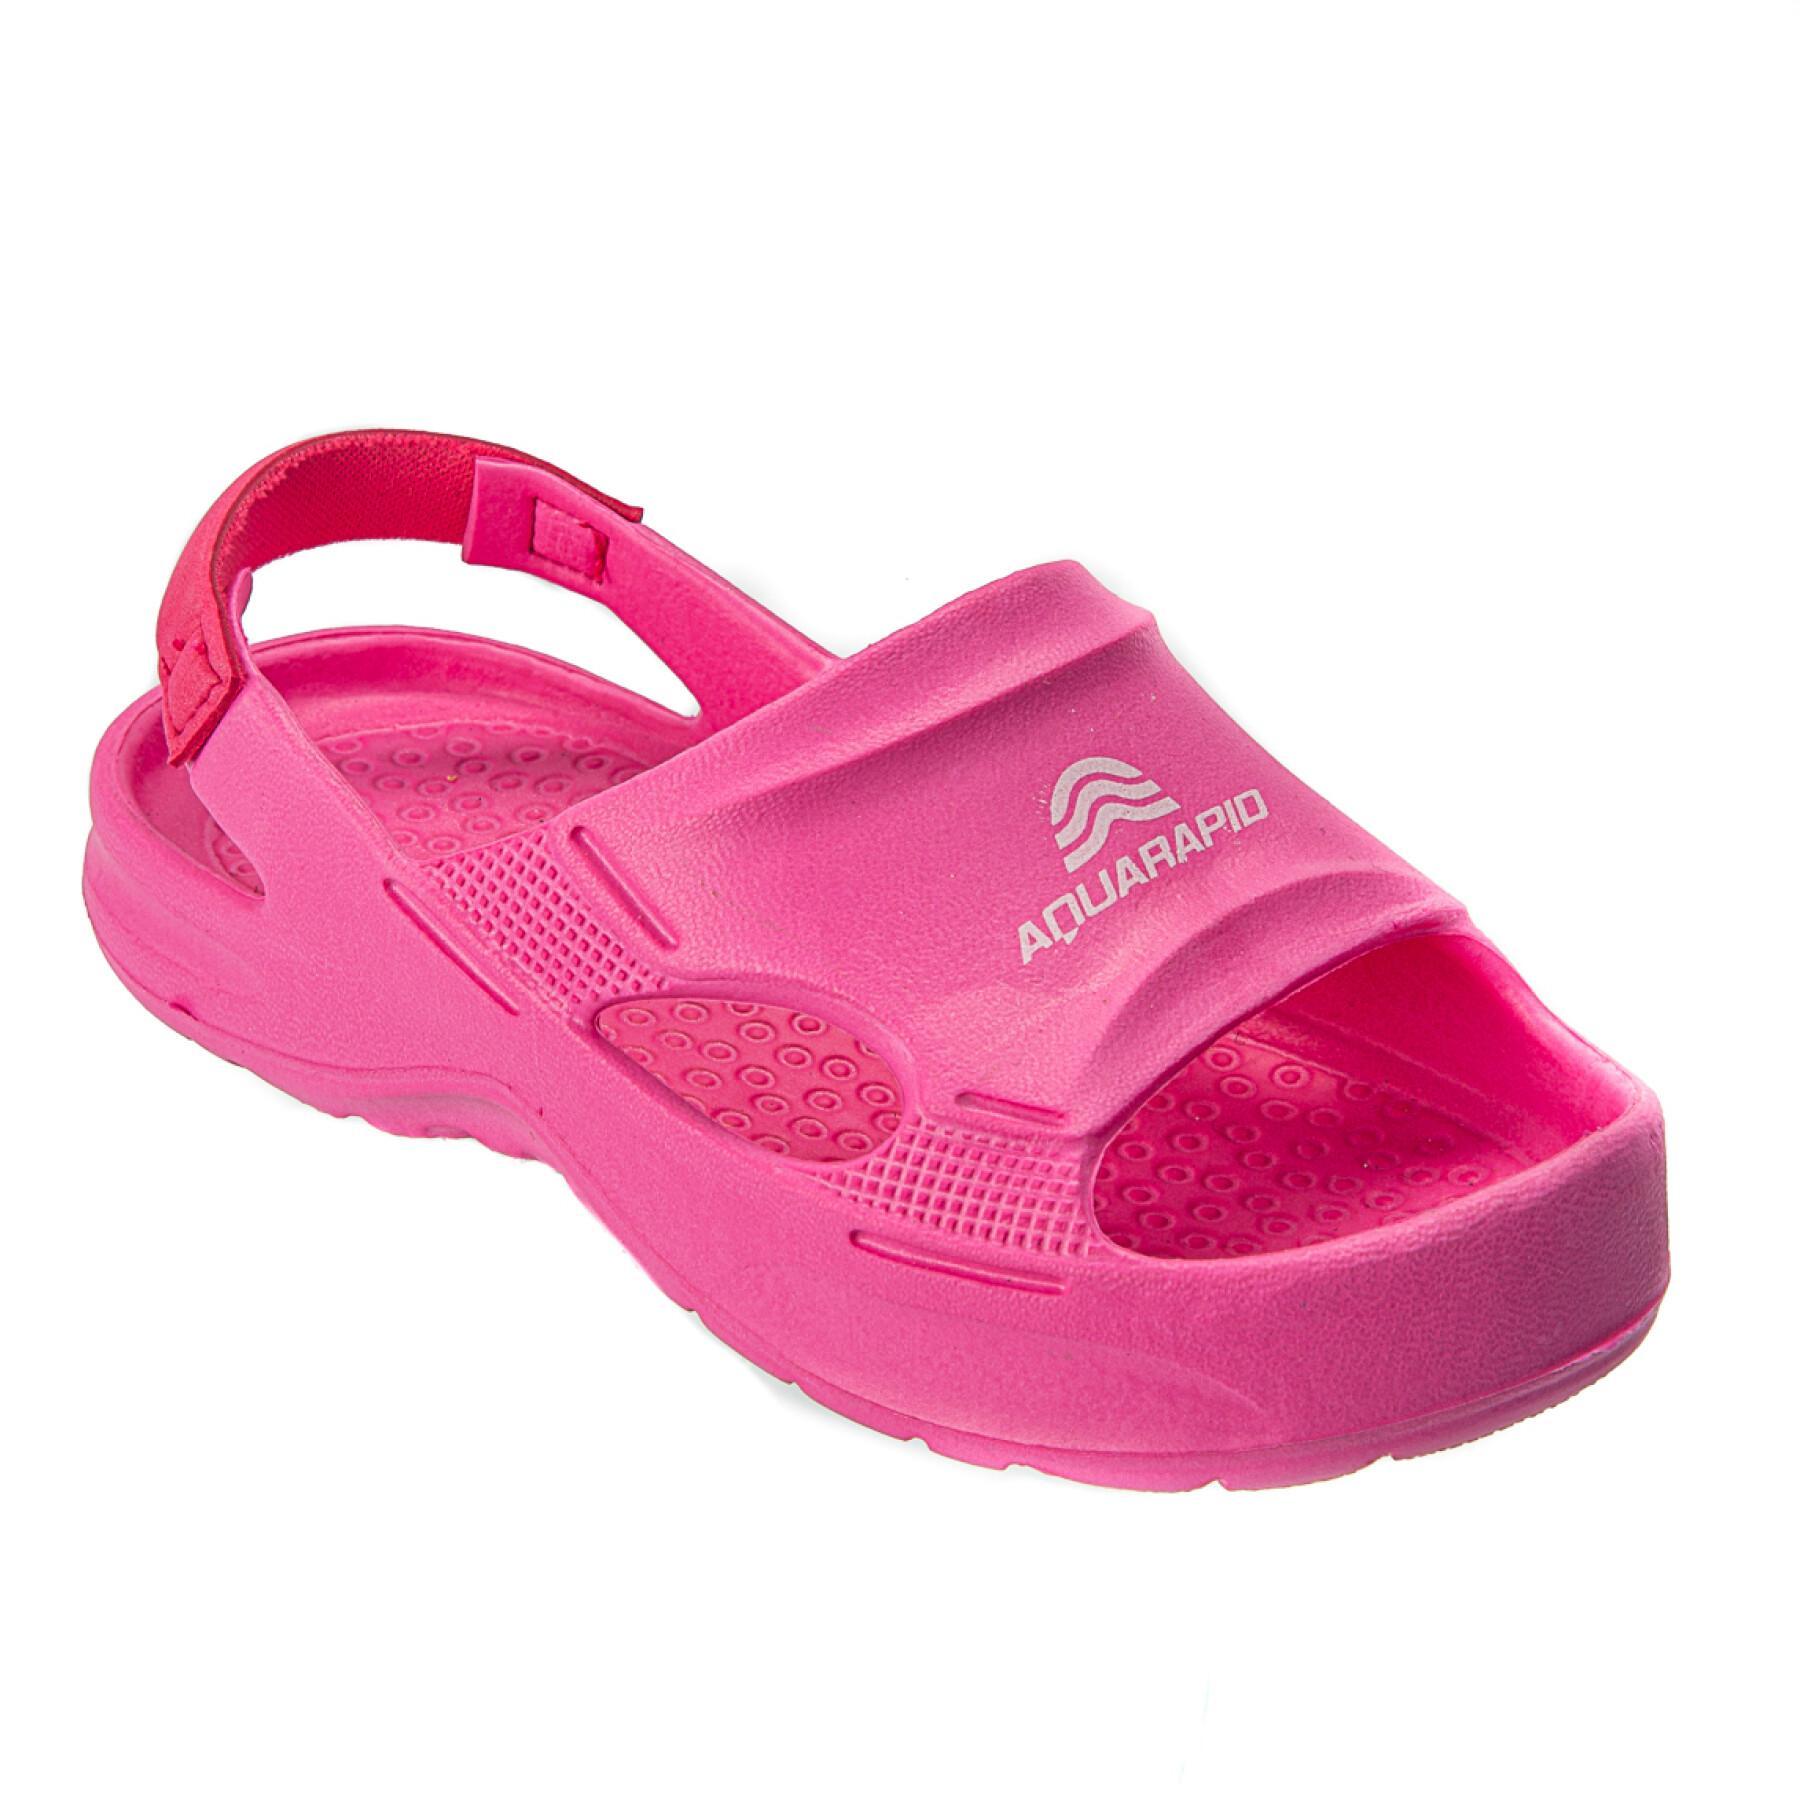 Sandálias para bebés Aquarapid Giba